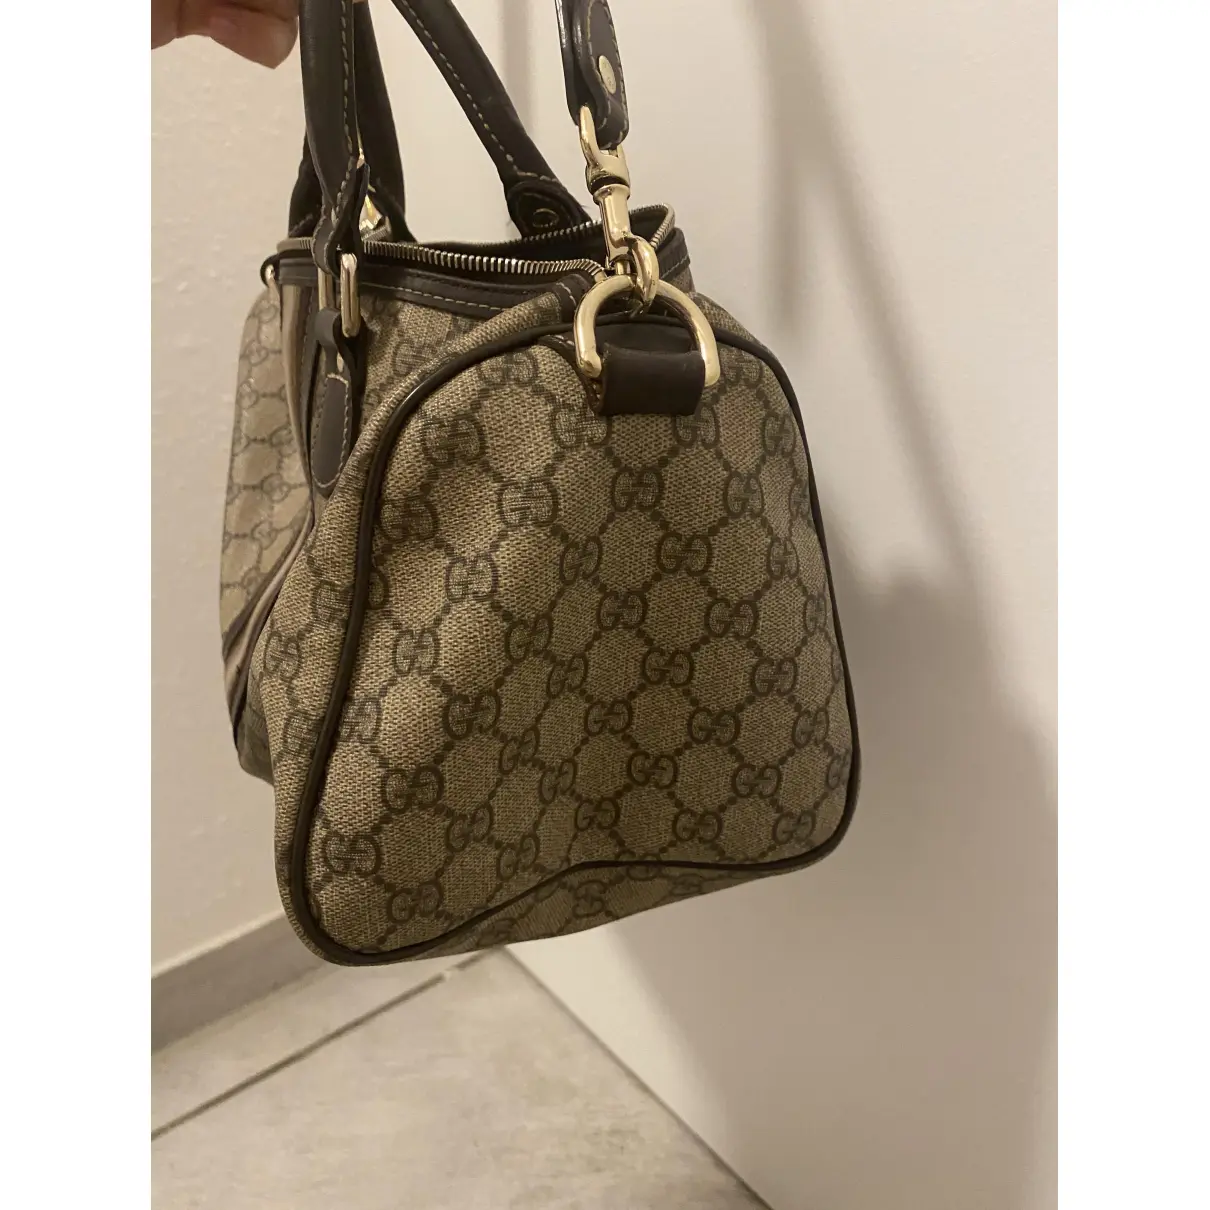 Buy Gucci Boston cloth crossbody bag online